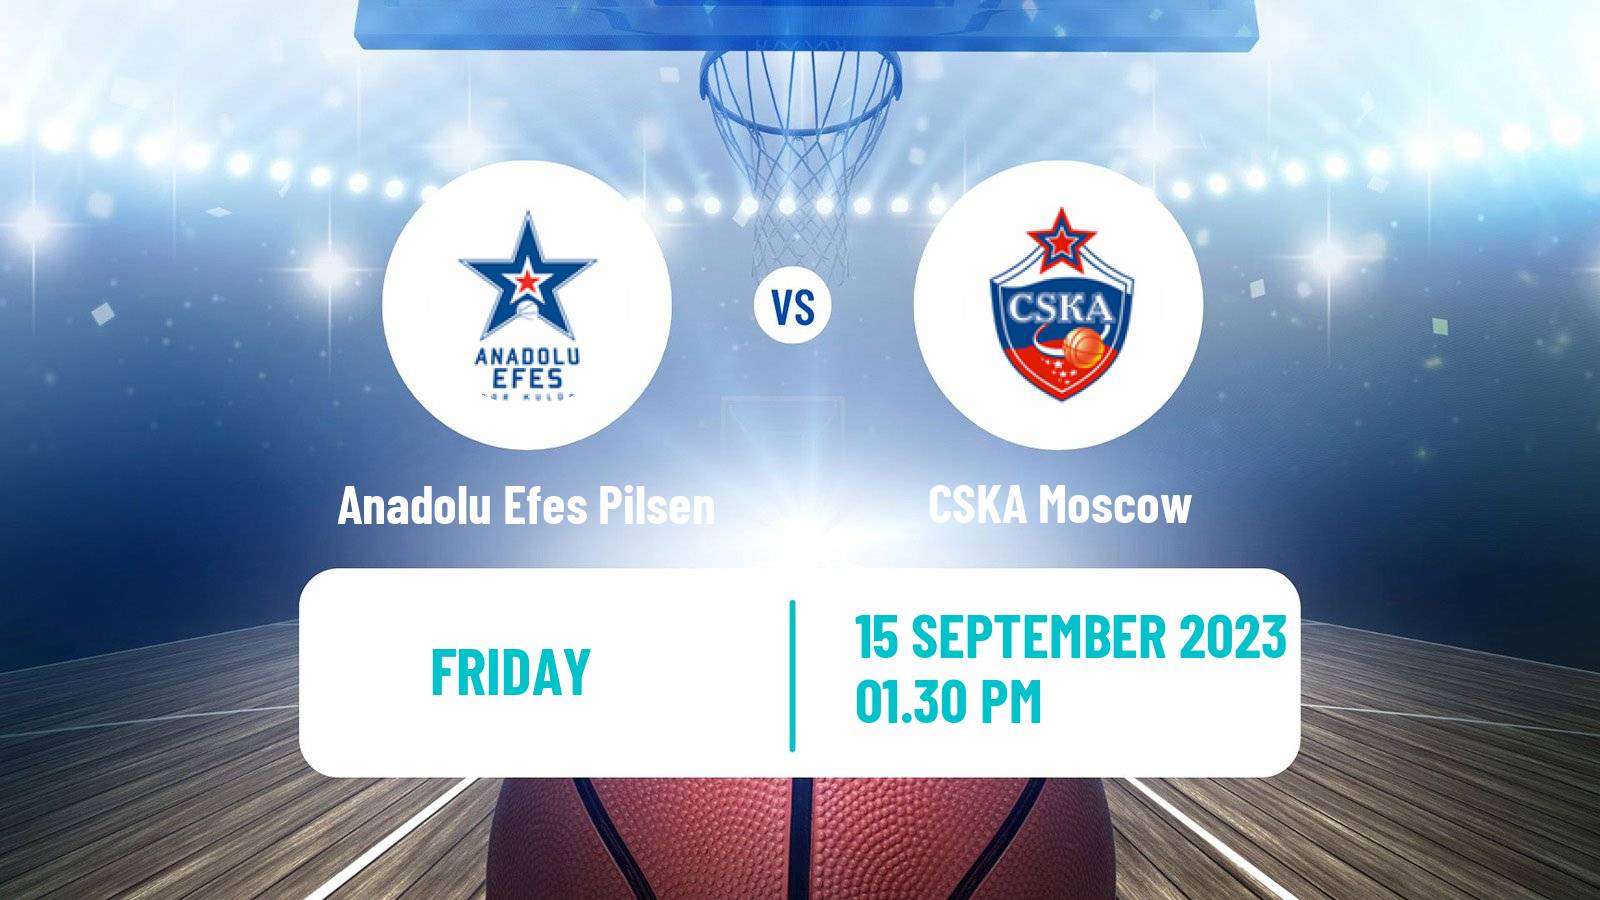 Basketball Club Friendly Basketball Anadolu Efes Pilsen - CSKA Moscow